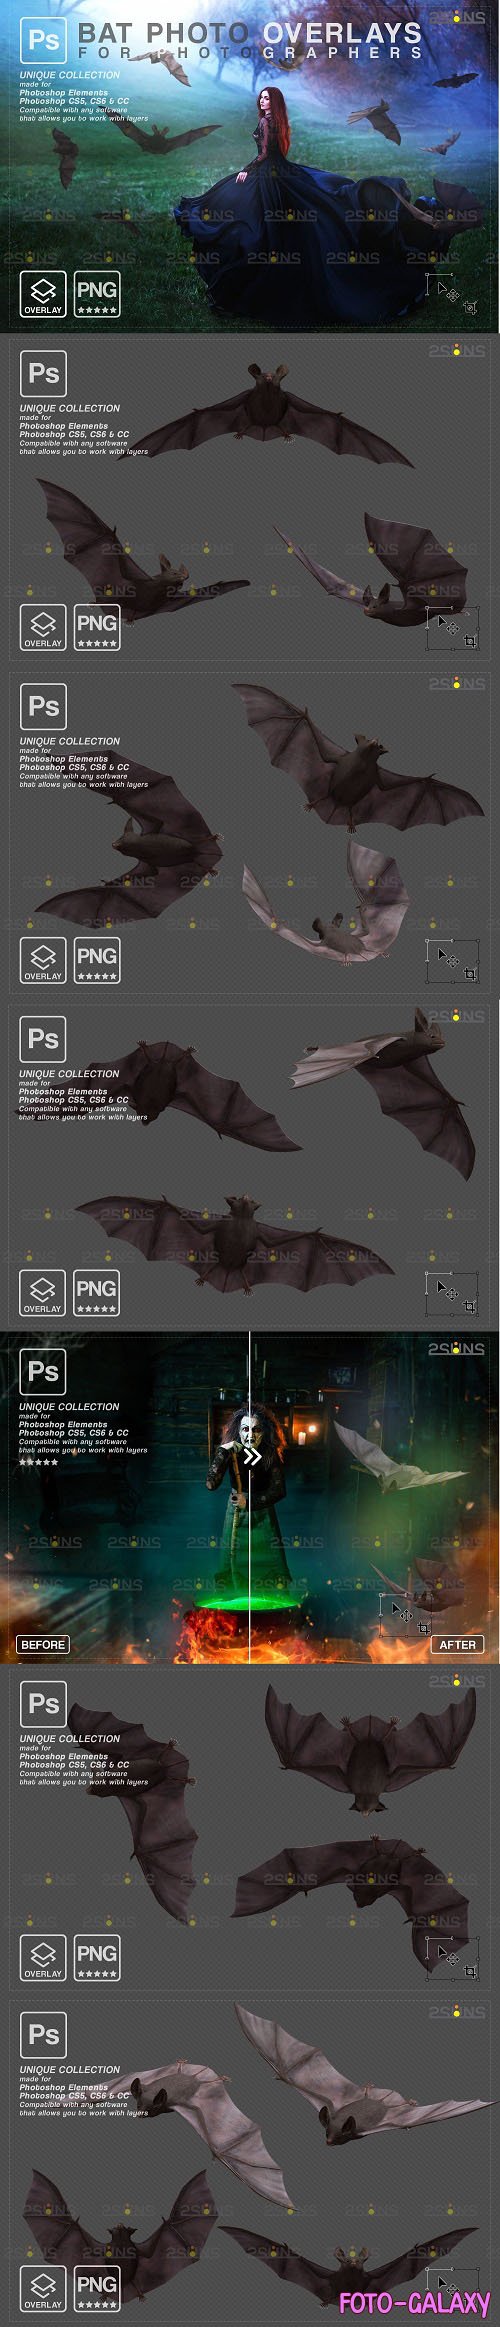 Halloween overlay Photoshop overlay Realistic bat clipart - 1447939